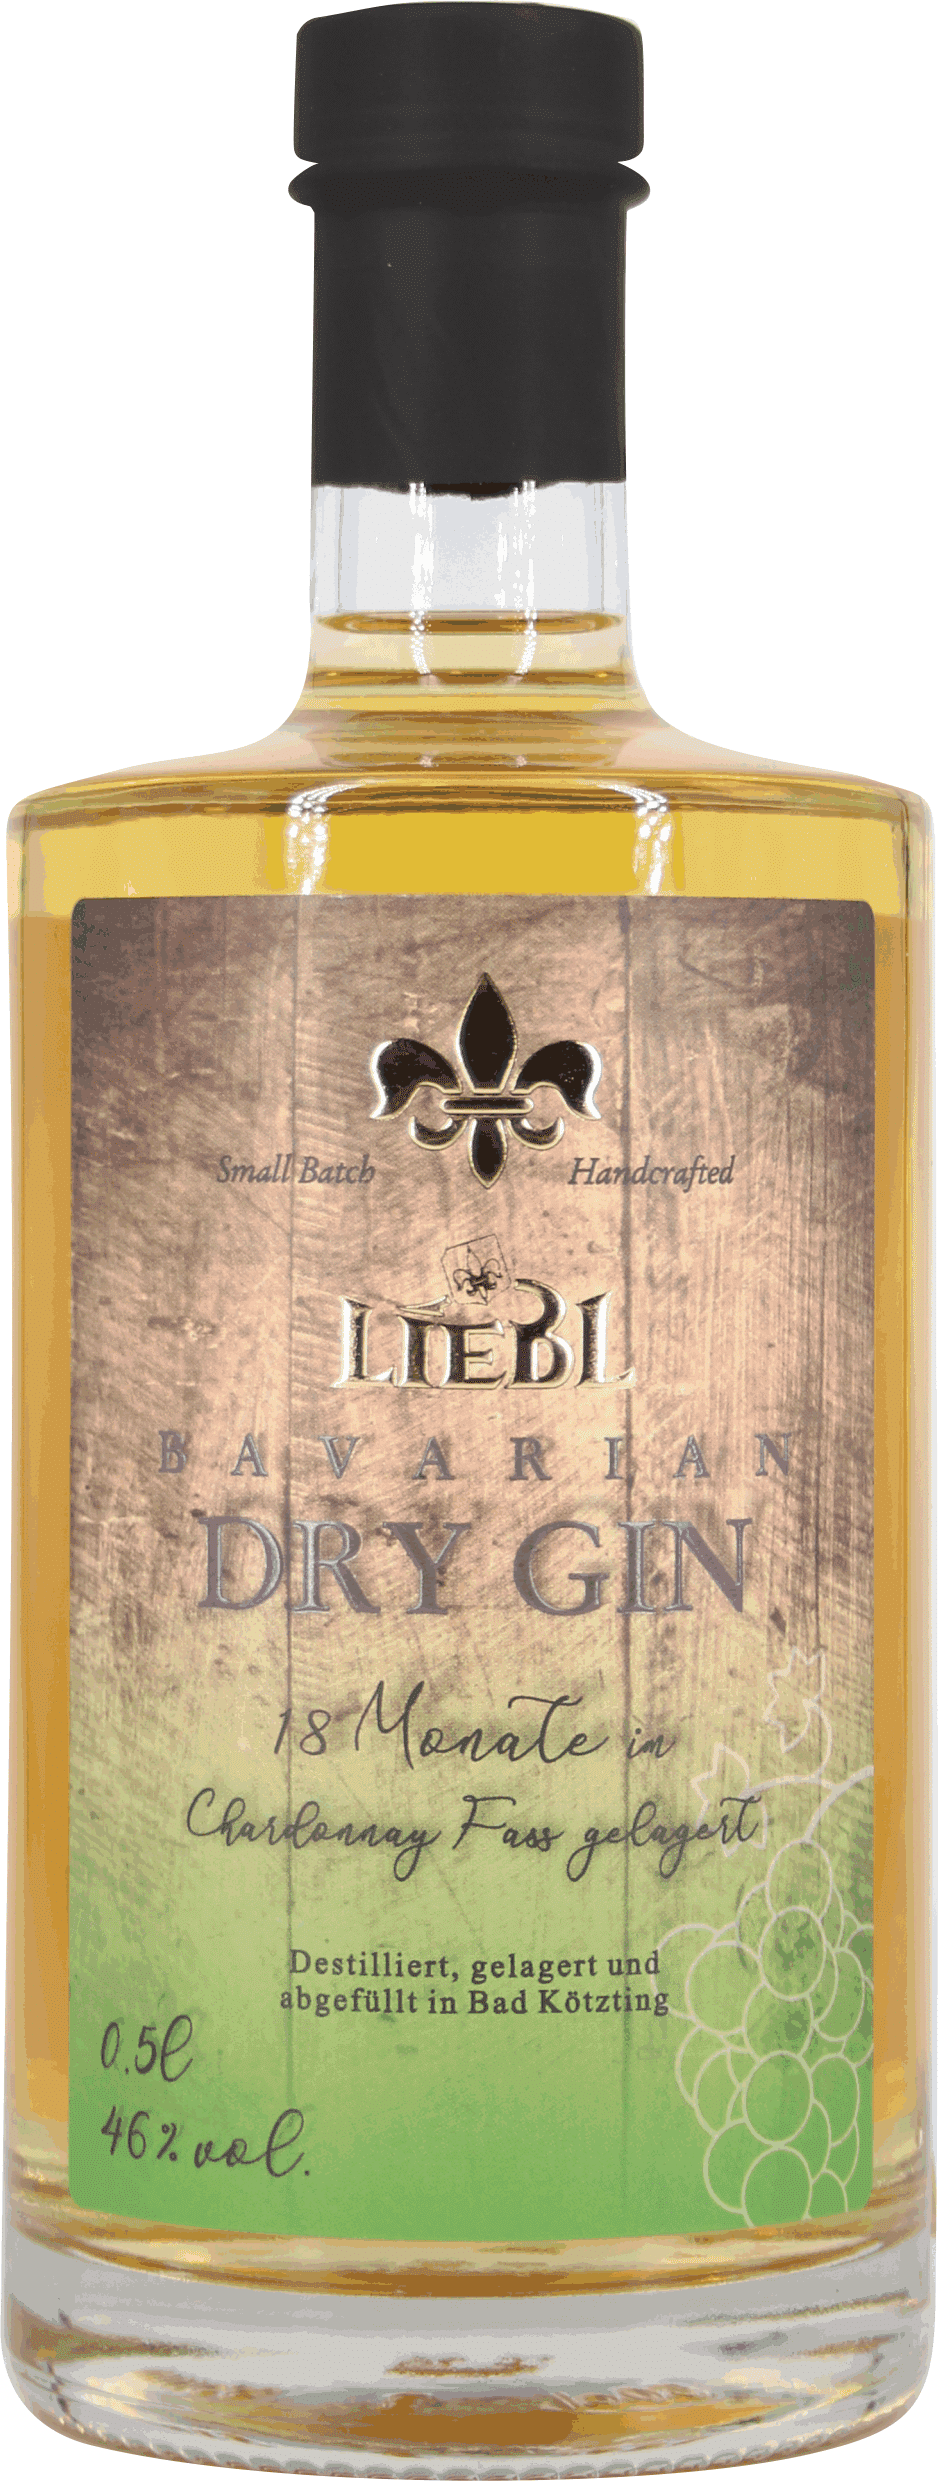 Liebl - Bavarian Dry Gin Chardonnay Fass 18 Monate Gereift